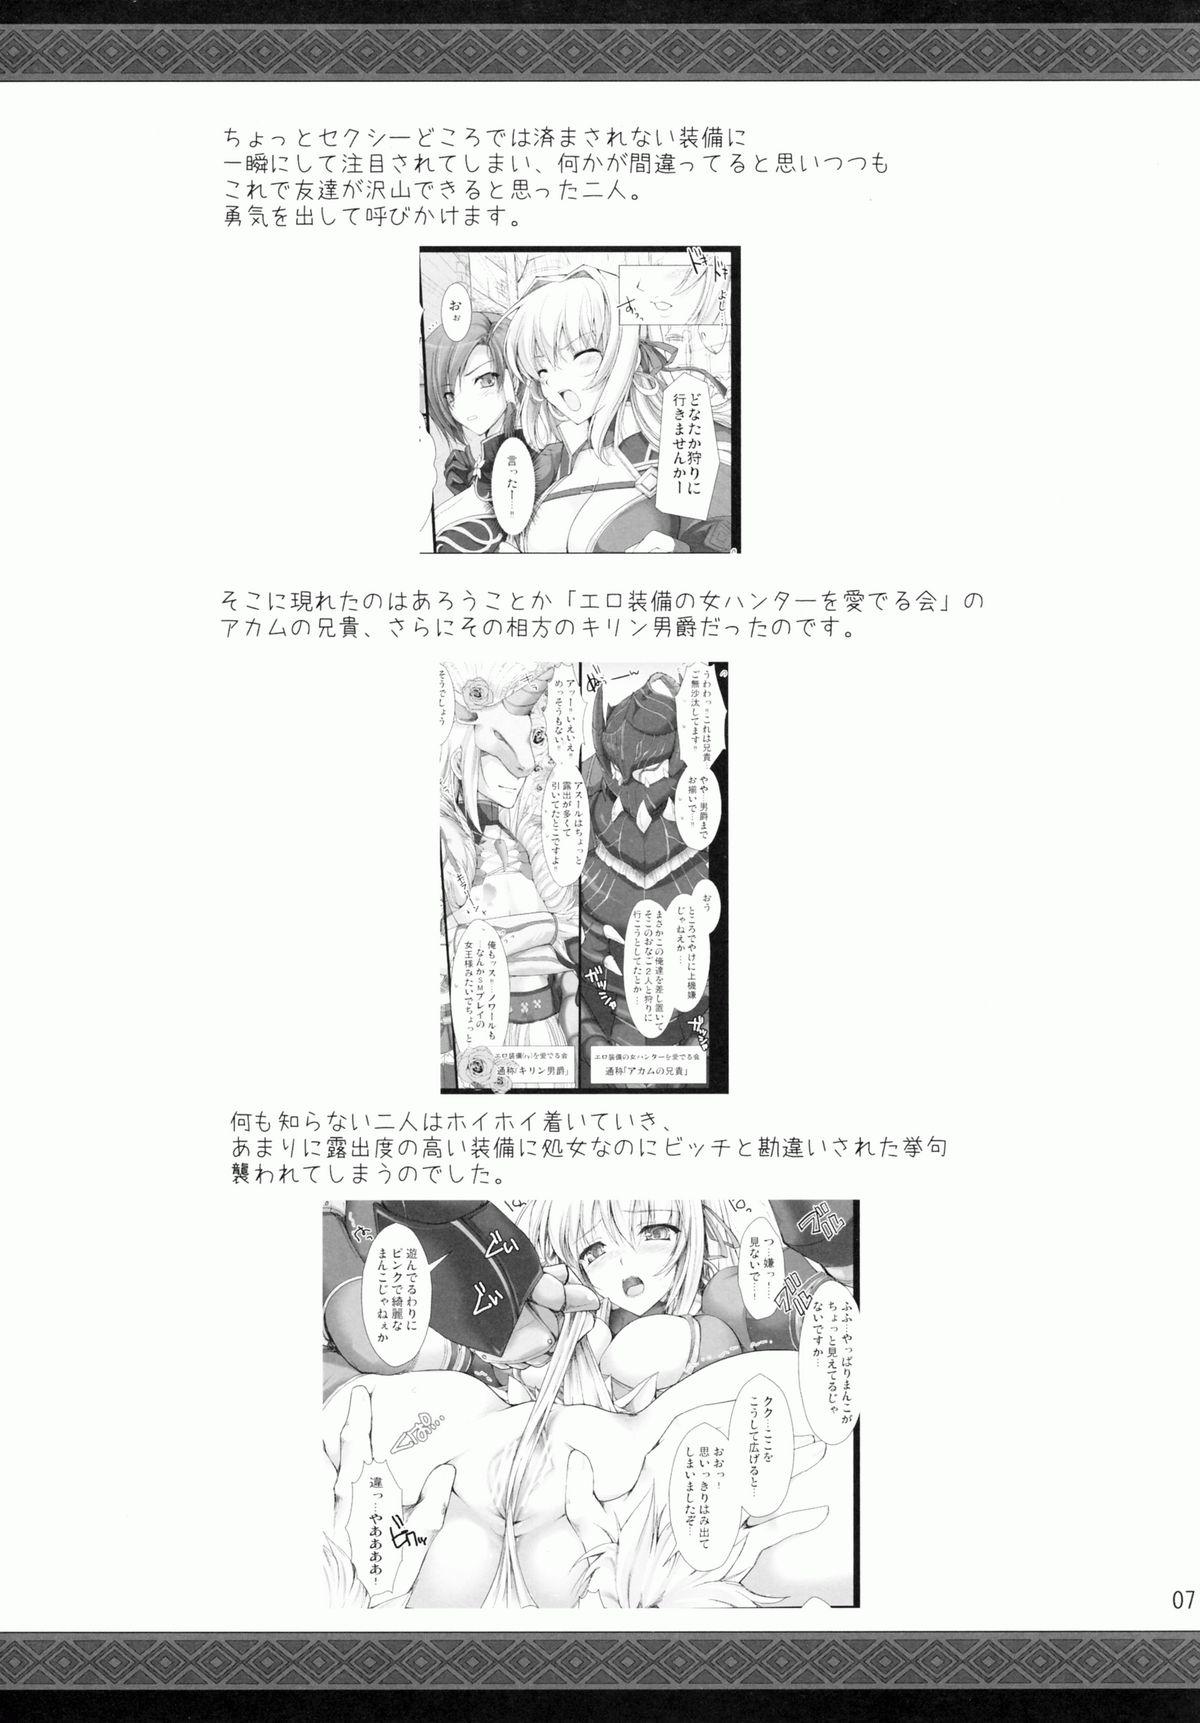 Punishment Monhan no Erohon 9 - Monster hunter Little - Page 7